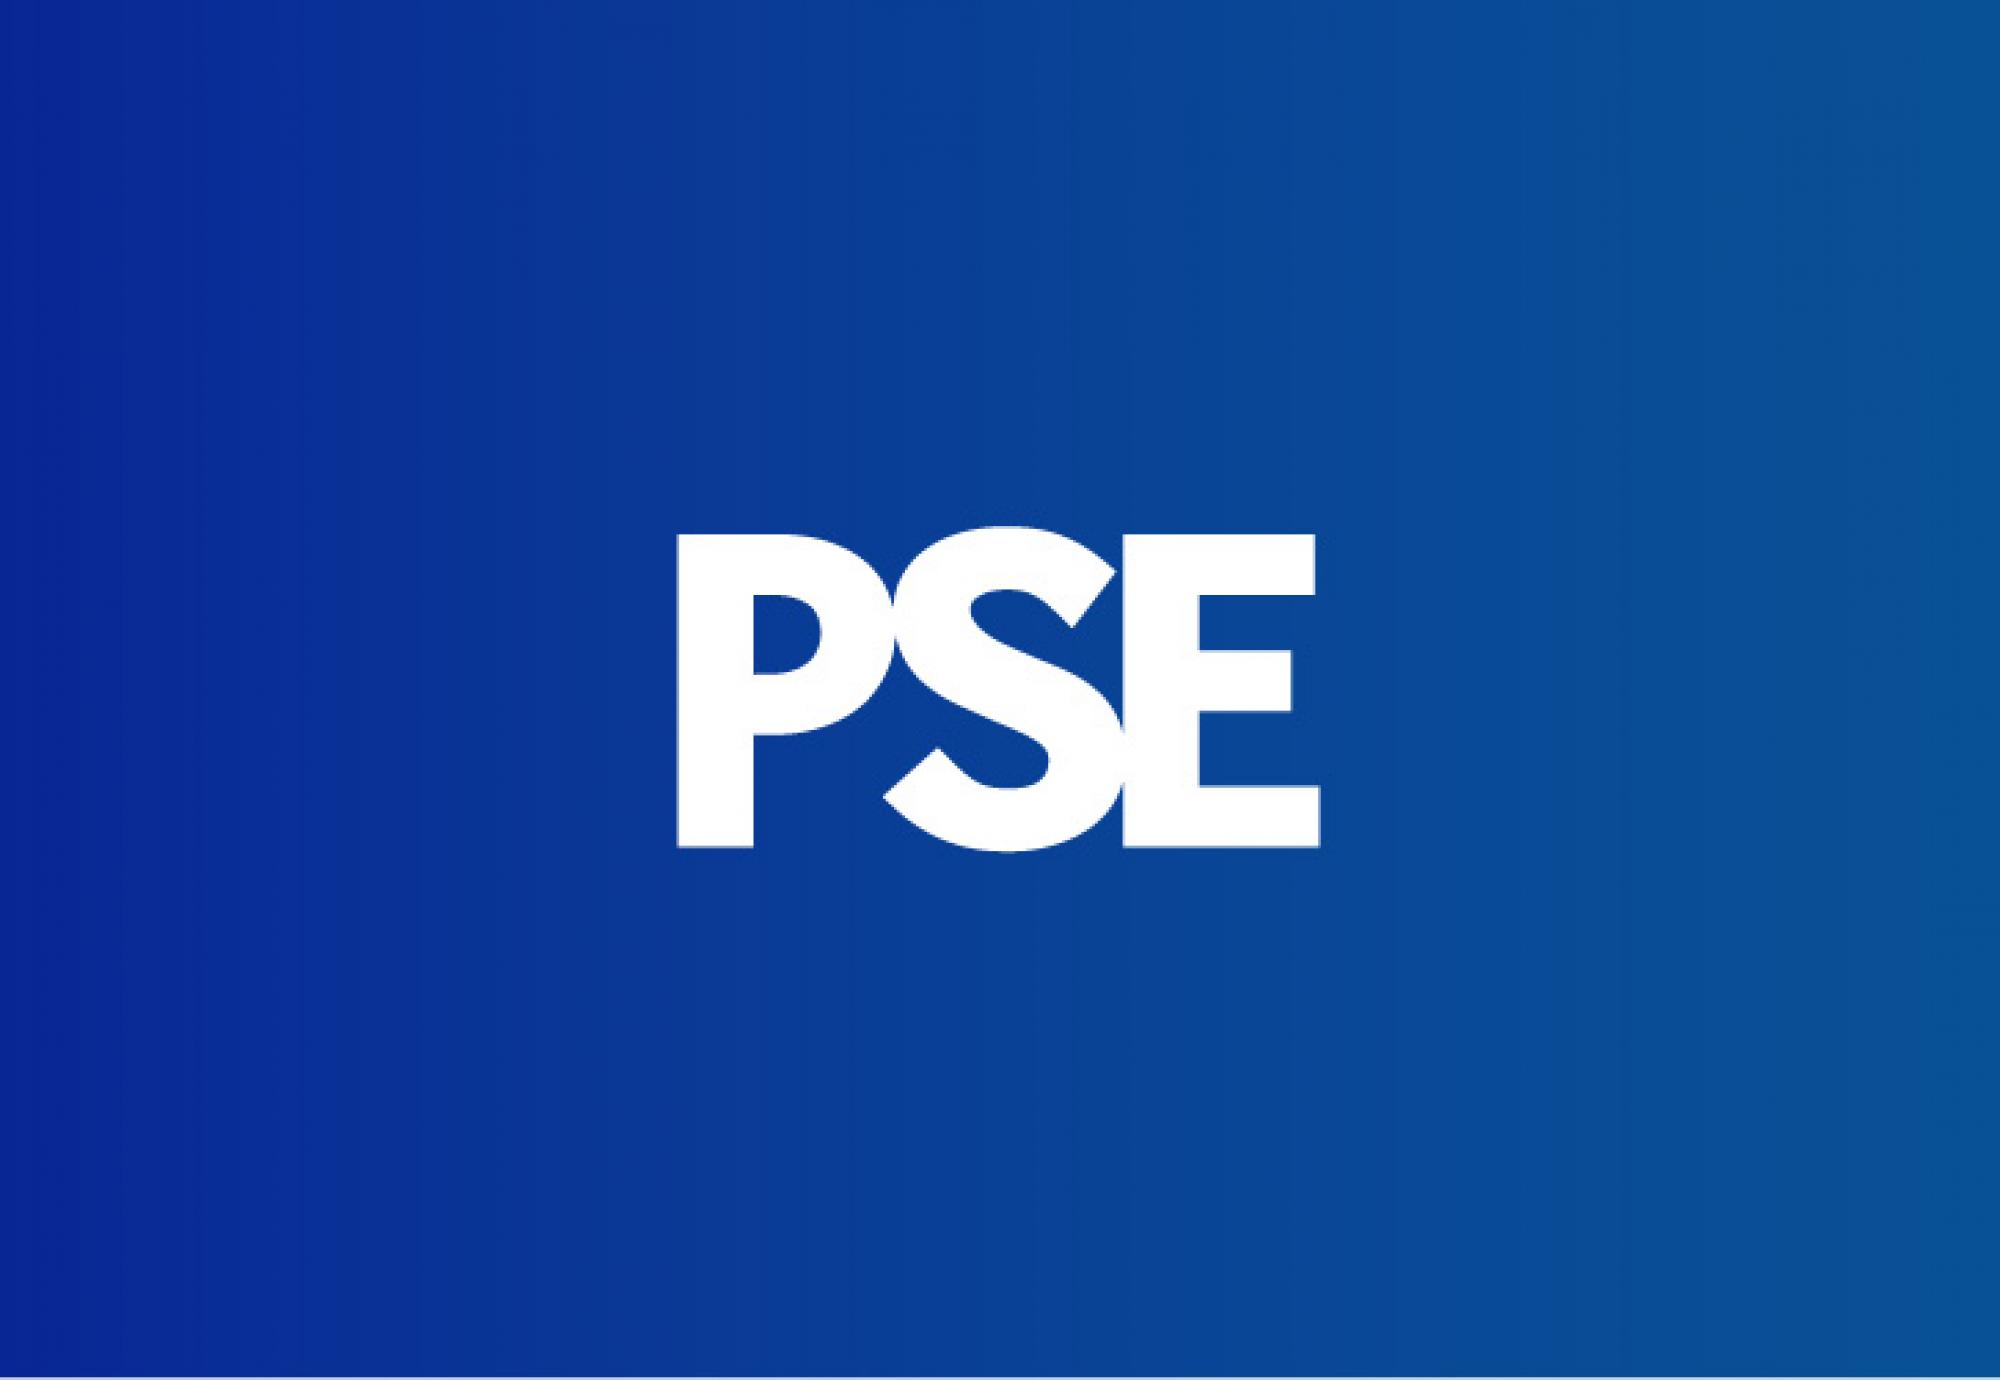 PSE header